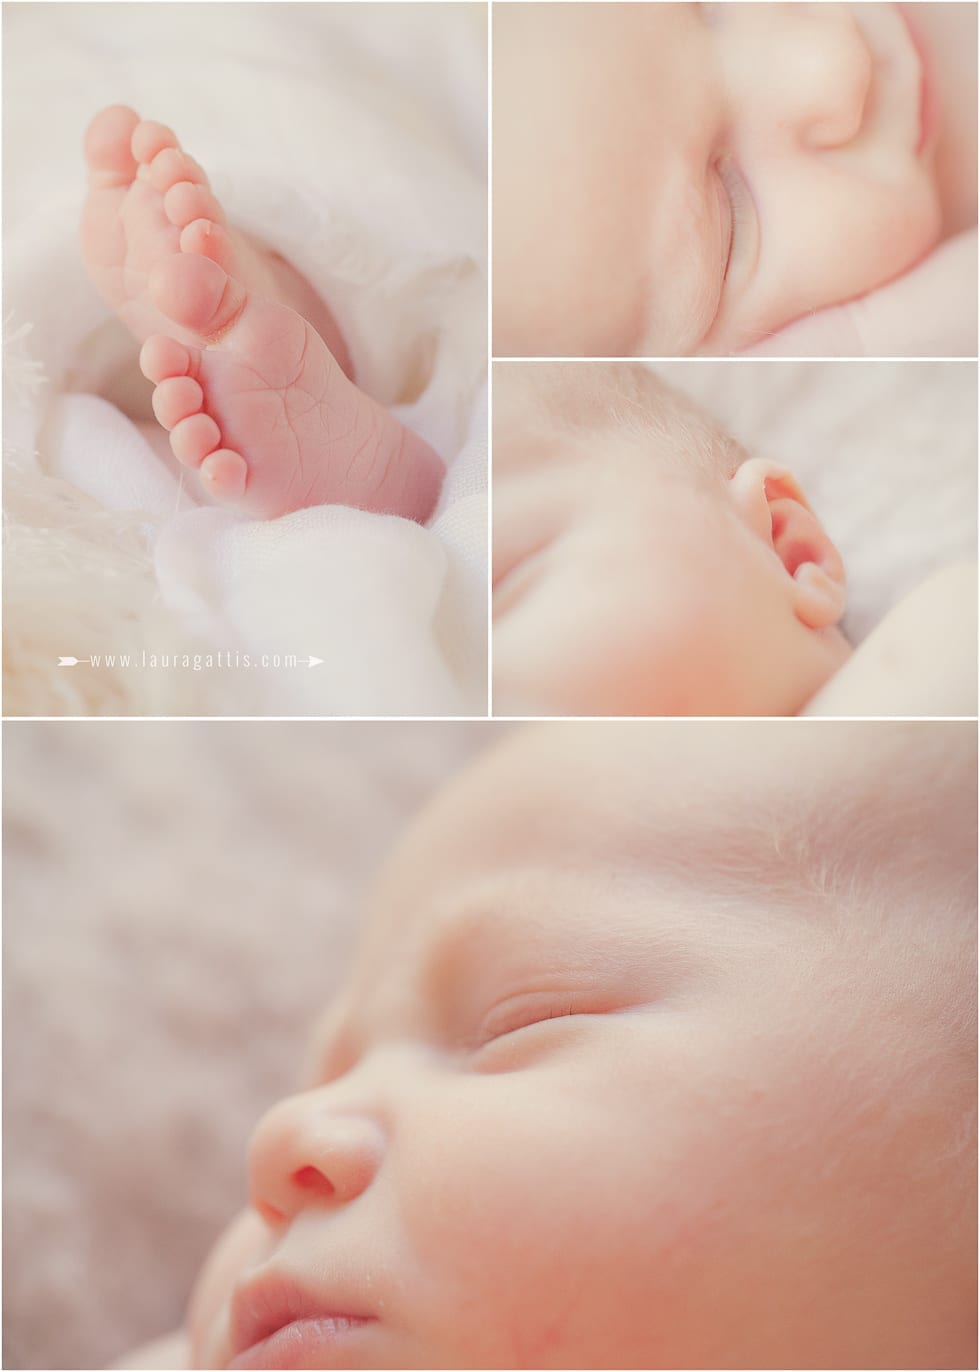 newborn photography | laura gattis photography | www.lauragattis.com